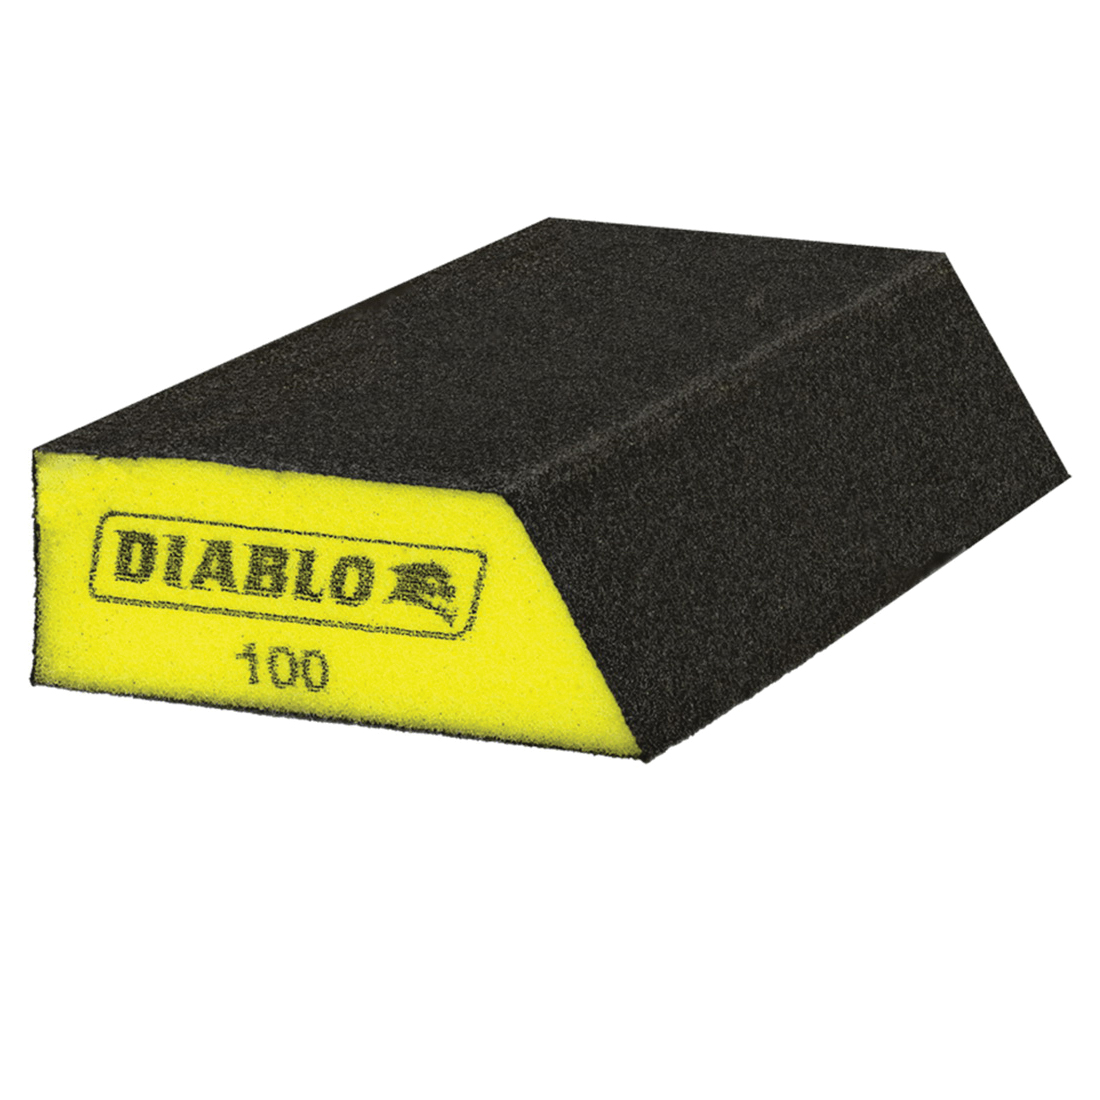 DFBLANGFIN04G Sanding Sponge, 5 in L, 3 in W, 100 Grit, Fine, Aluminum Oxide Abrasive